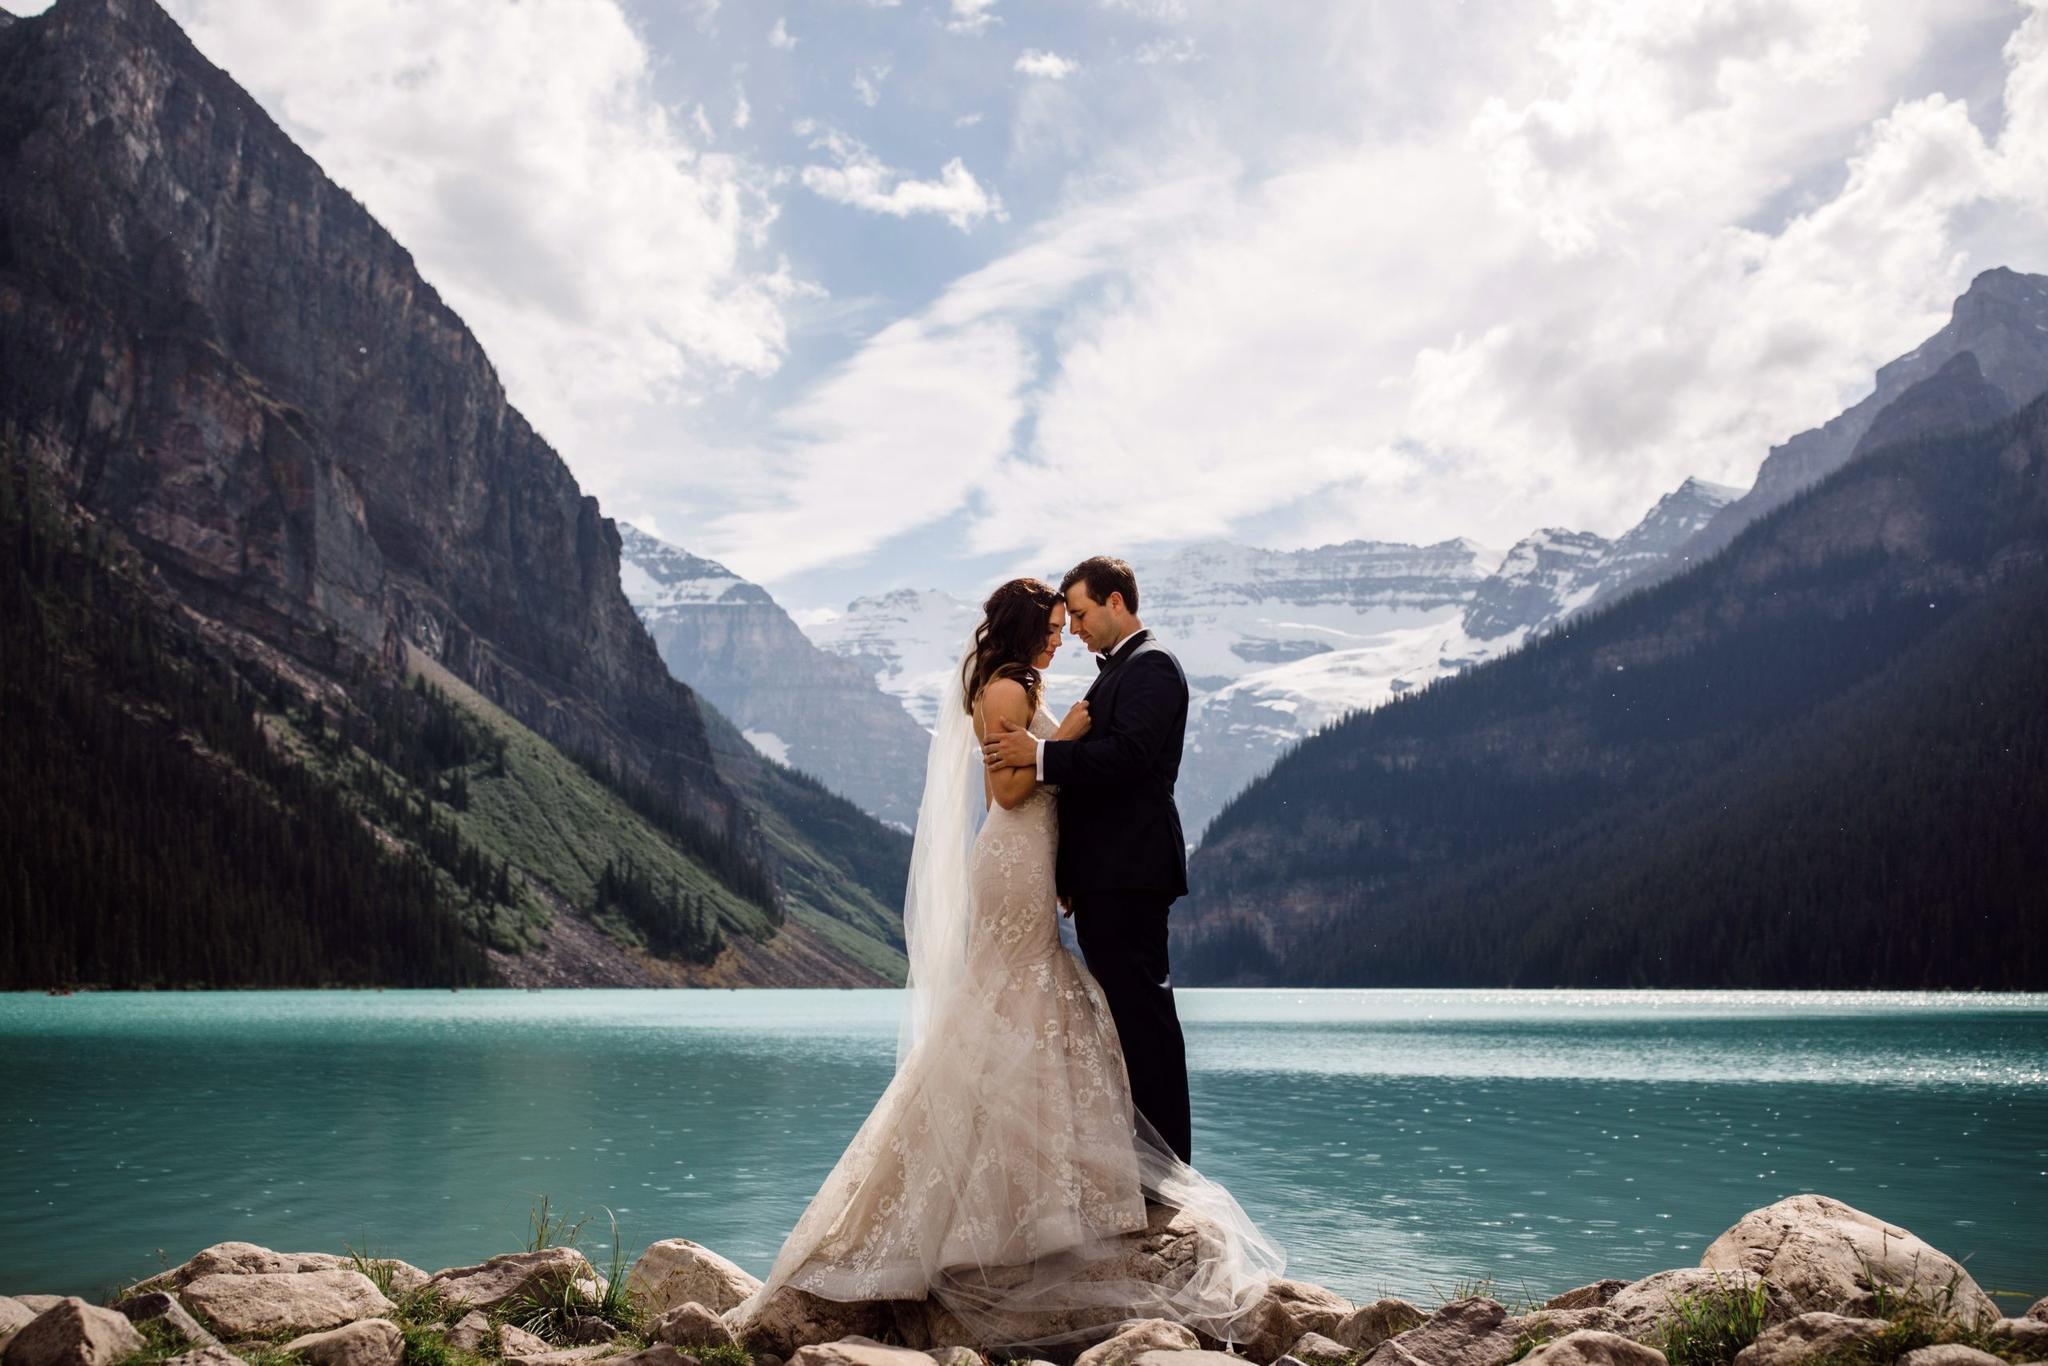 A Breathtaking Wedding Day at Lake Louise, Alberta